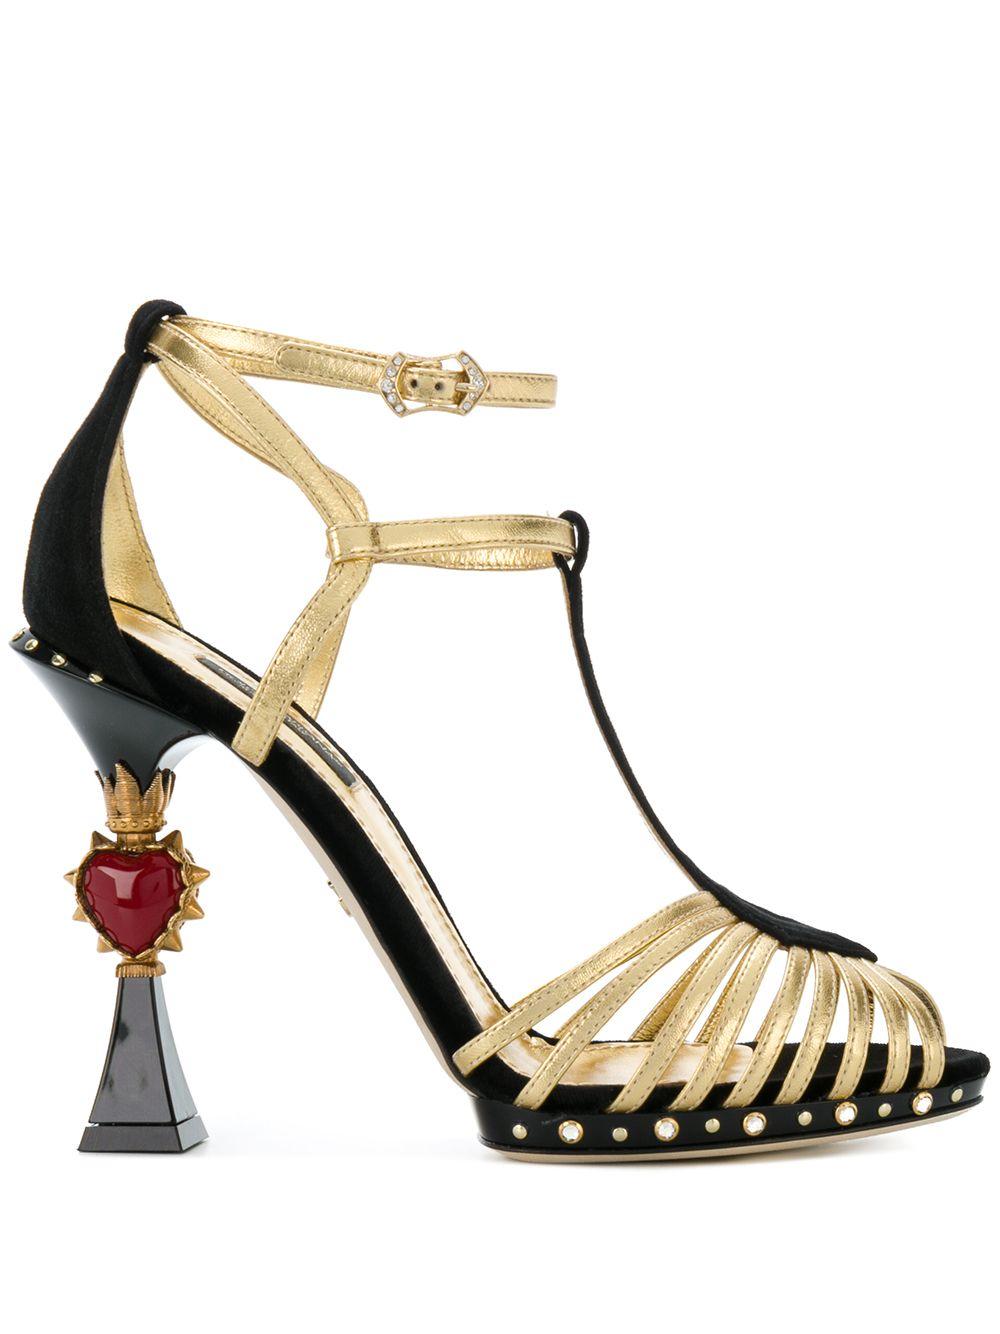 Dolce & Gabbana Bette Sculpted Heel Sandals in Black | Lyst